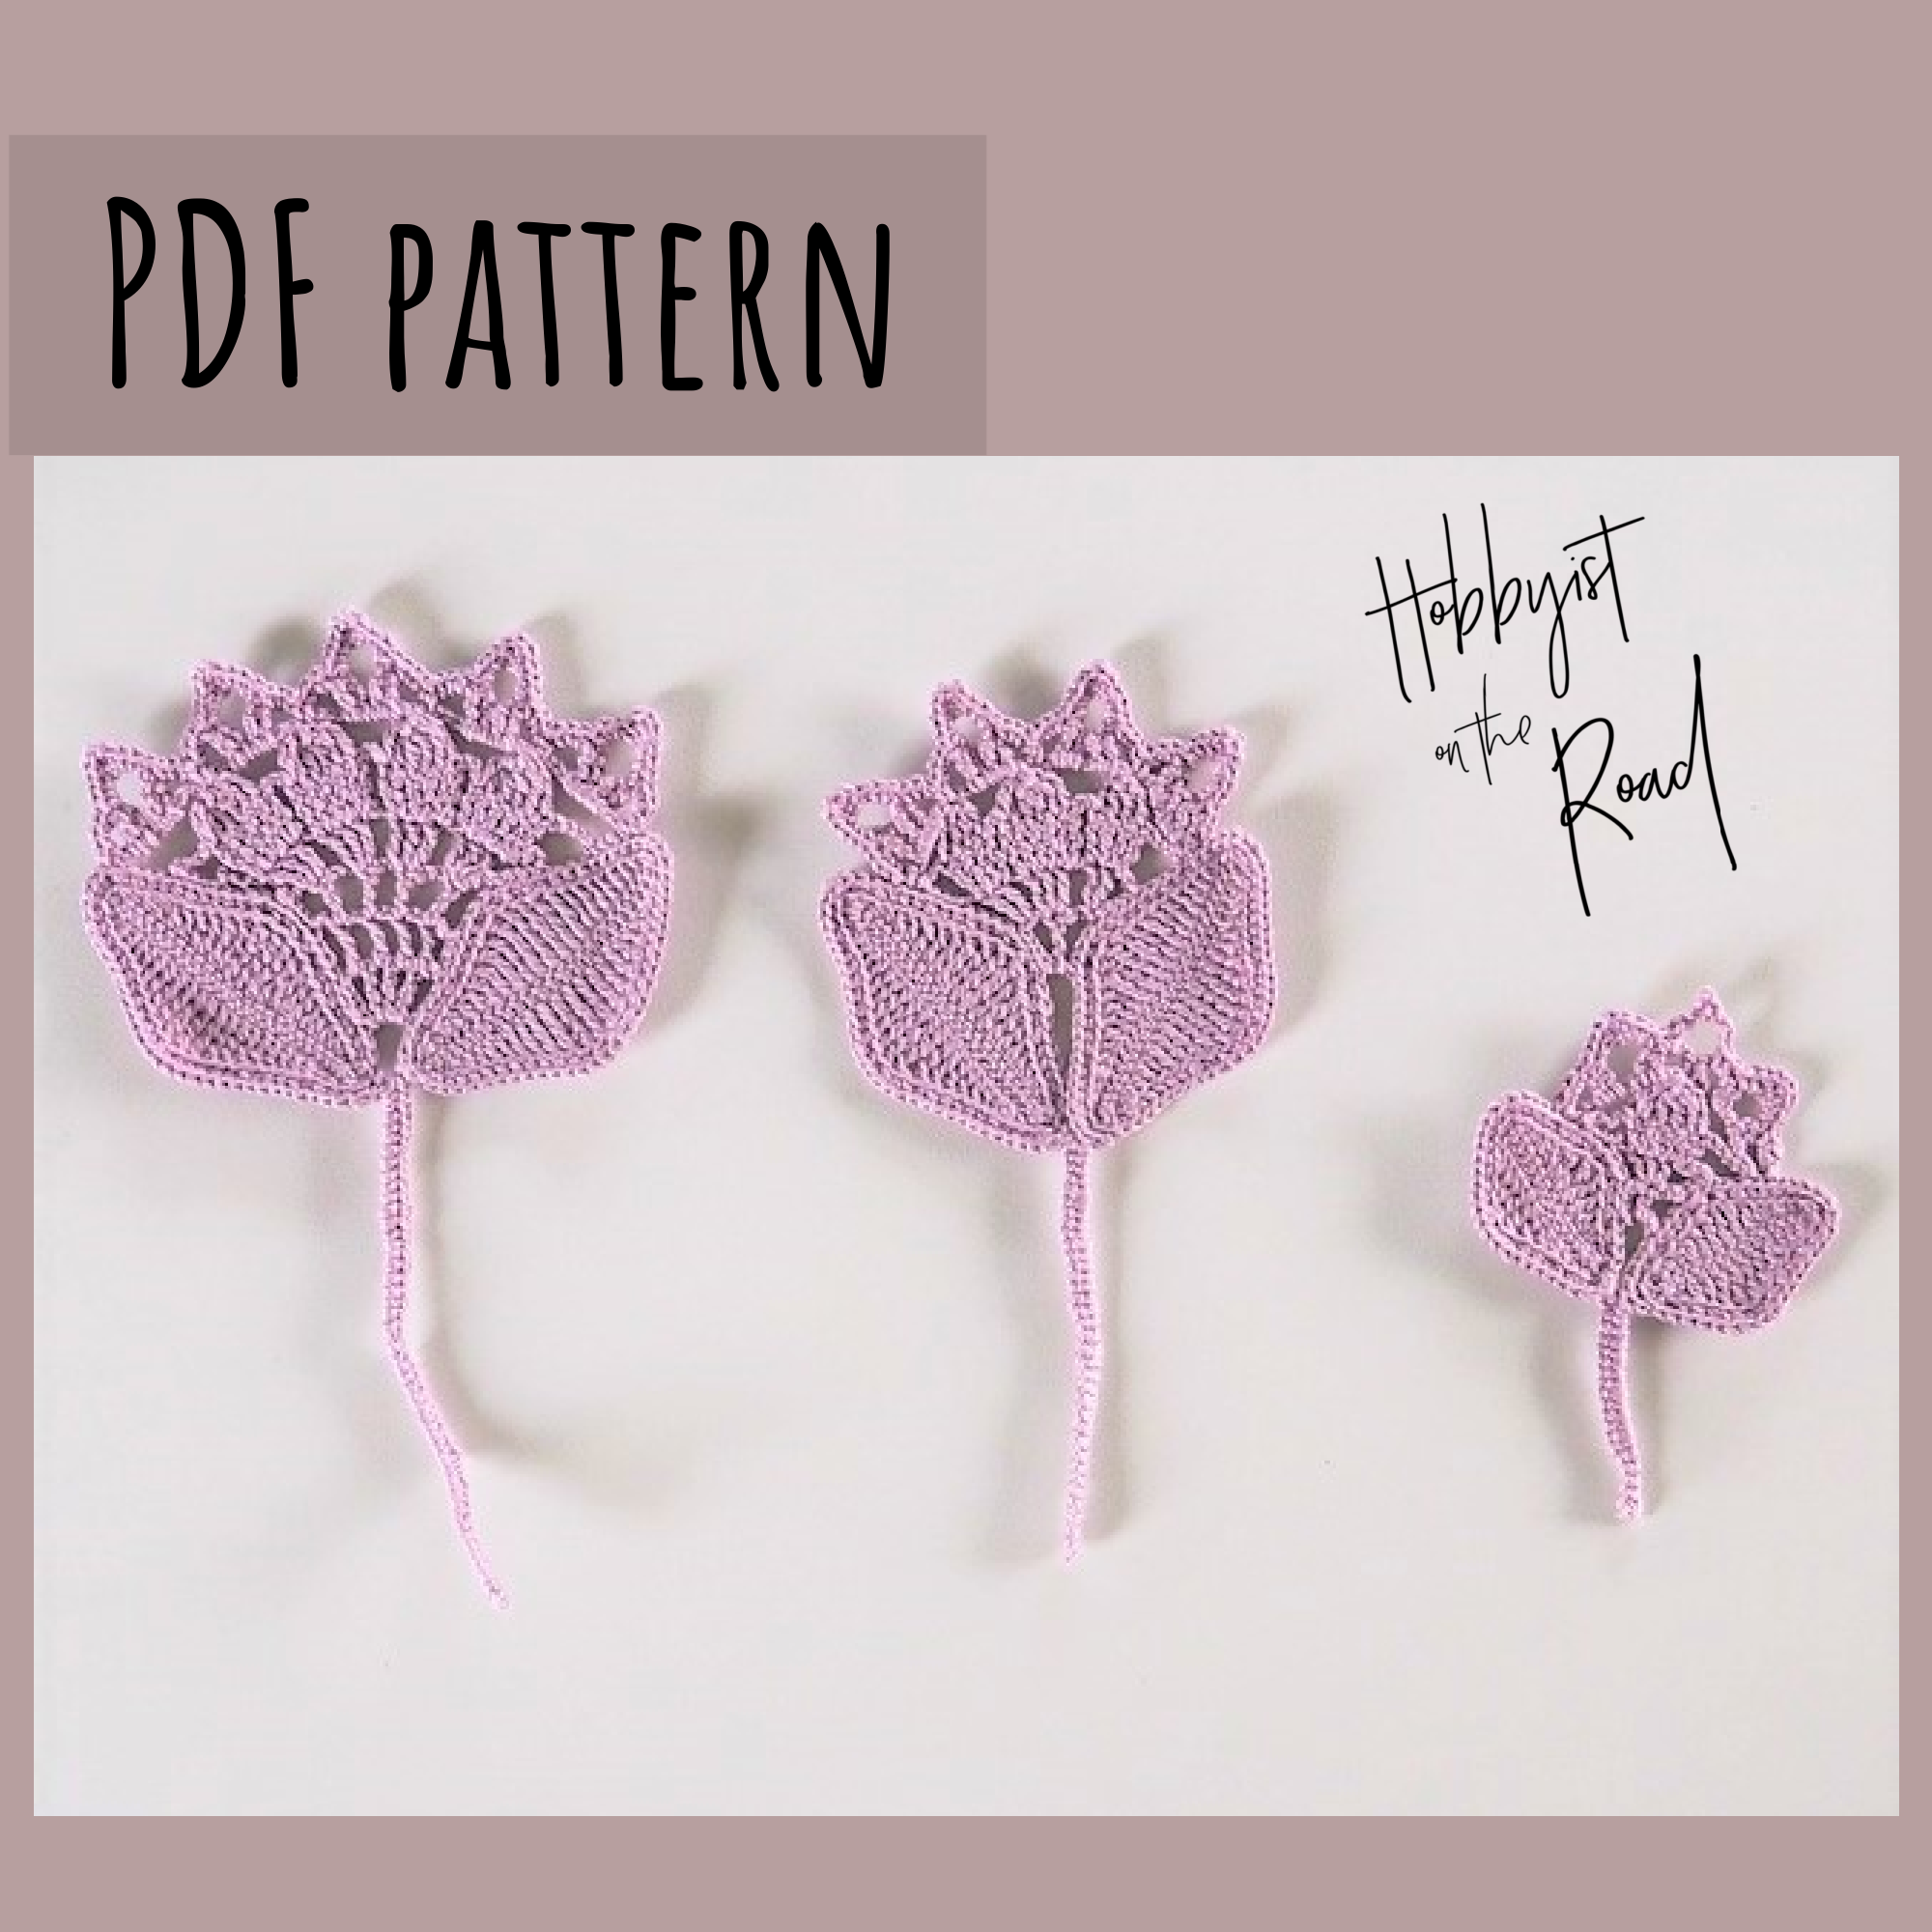 Irish Crochet Patterns